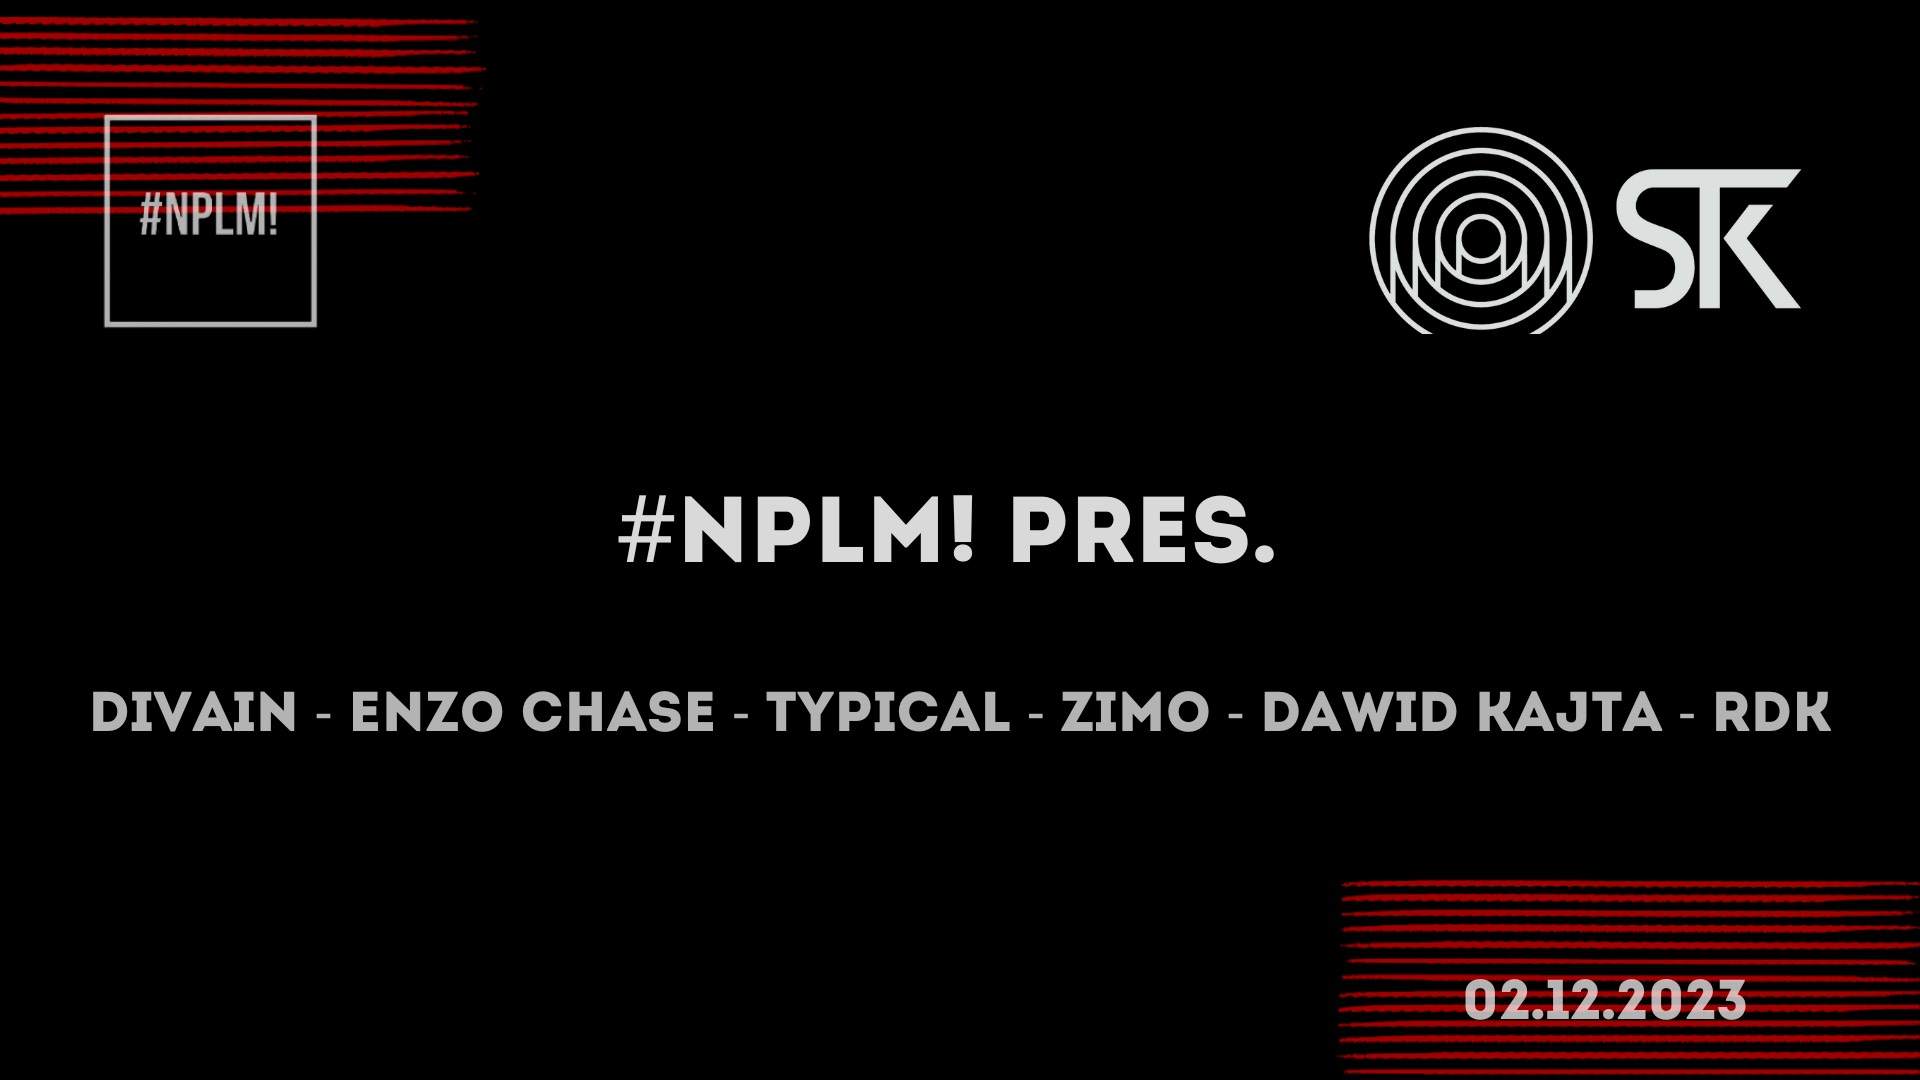 #NPLM! pres. Divain•Enzo Chase•TYPICAL•Zimo•DAWID KAJTA•RDK - フライヤー表